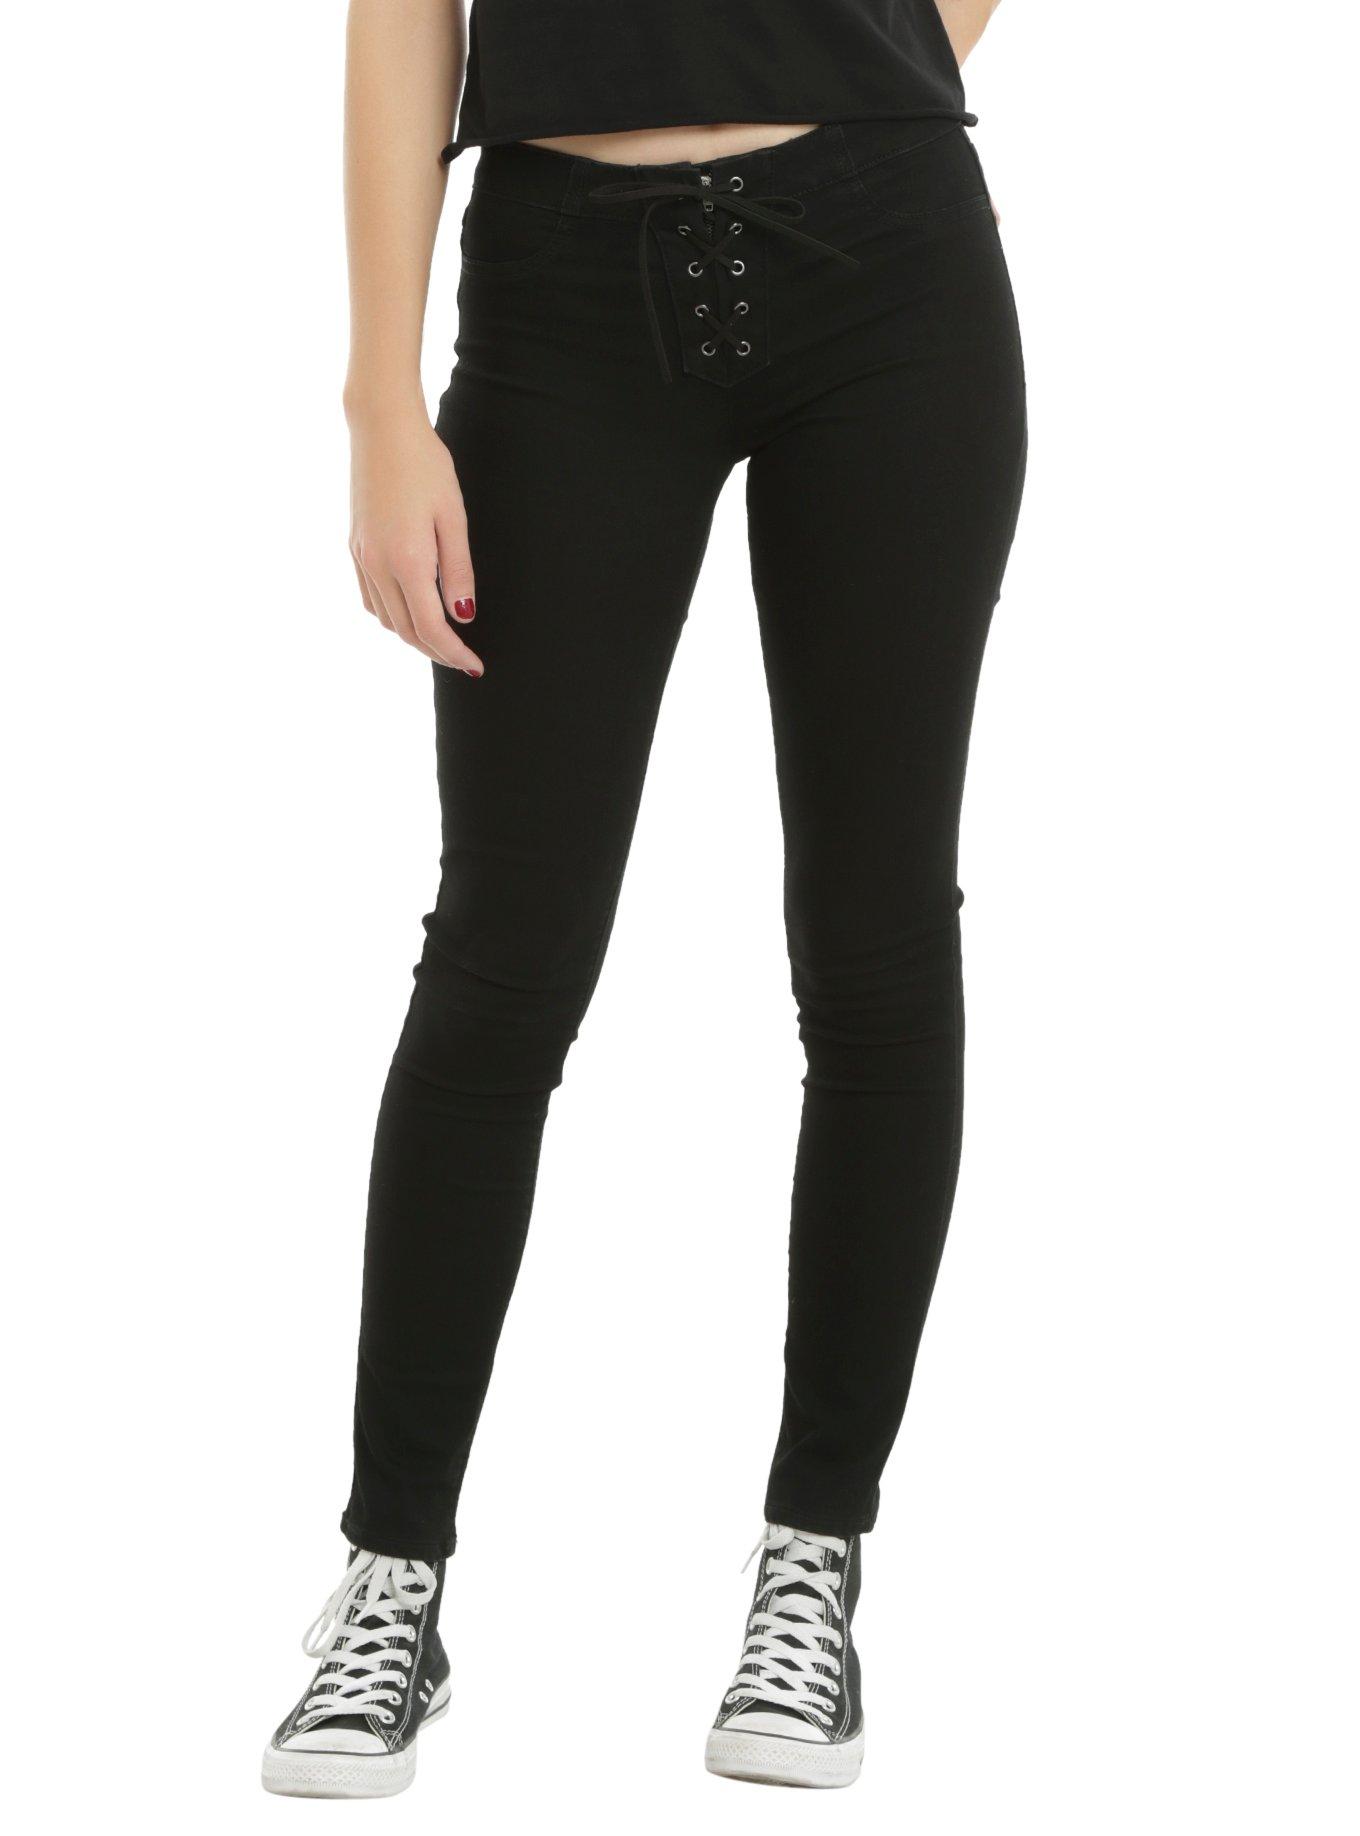 Blackheart Black Lace-Up Super Skinny Jeans, BLACK, hi-res